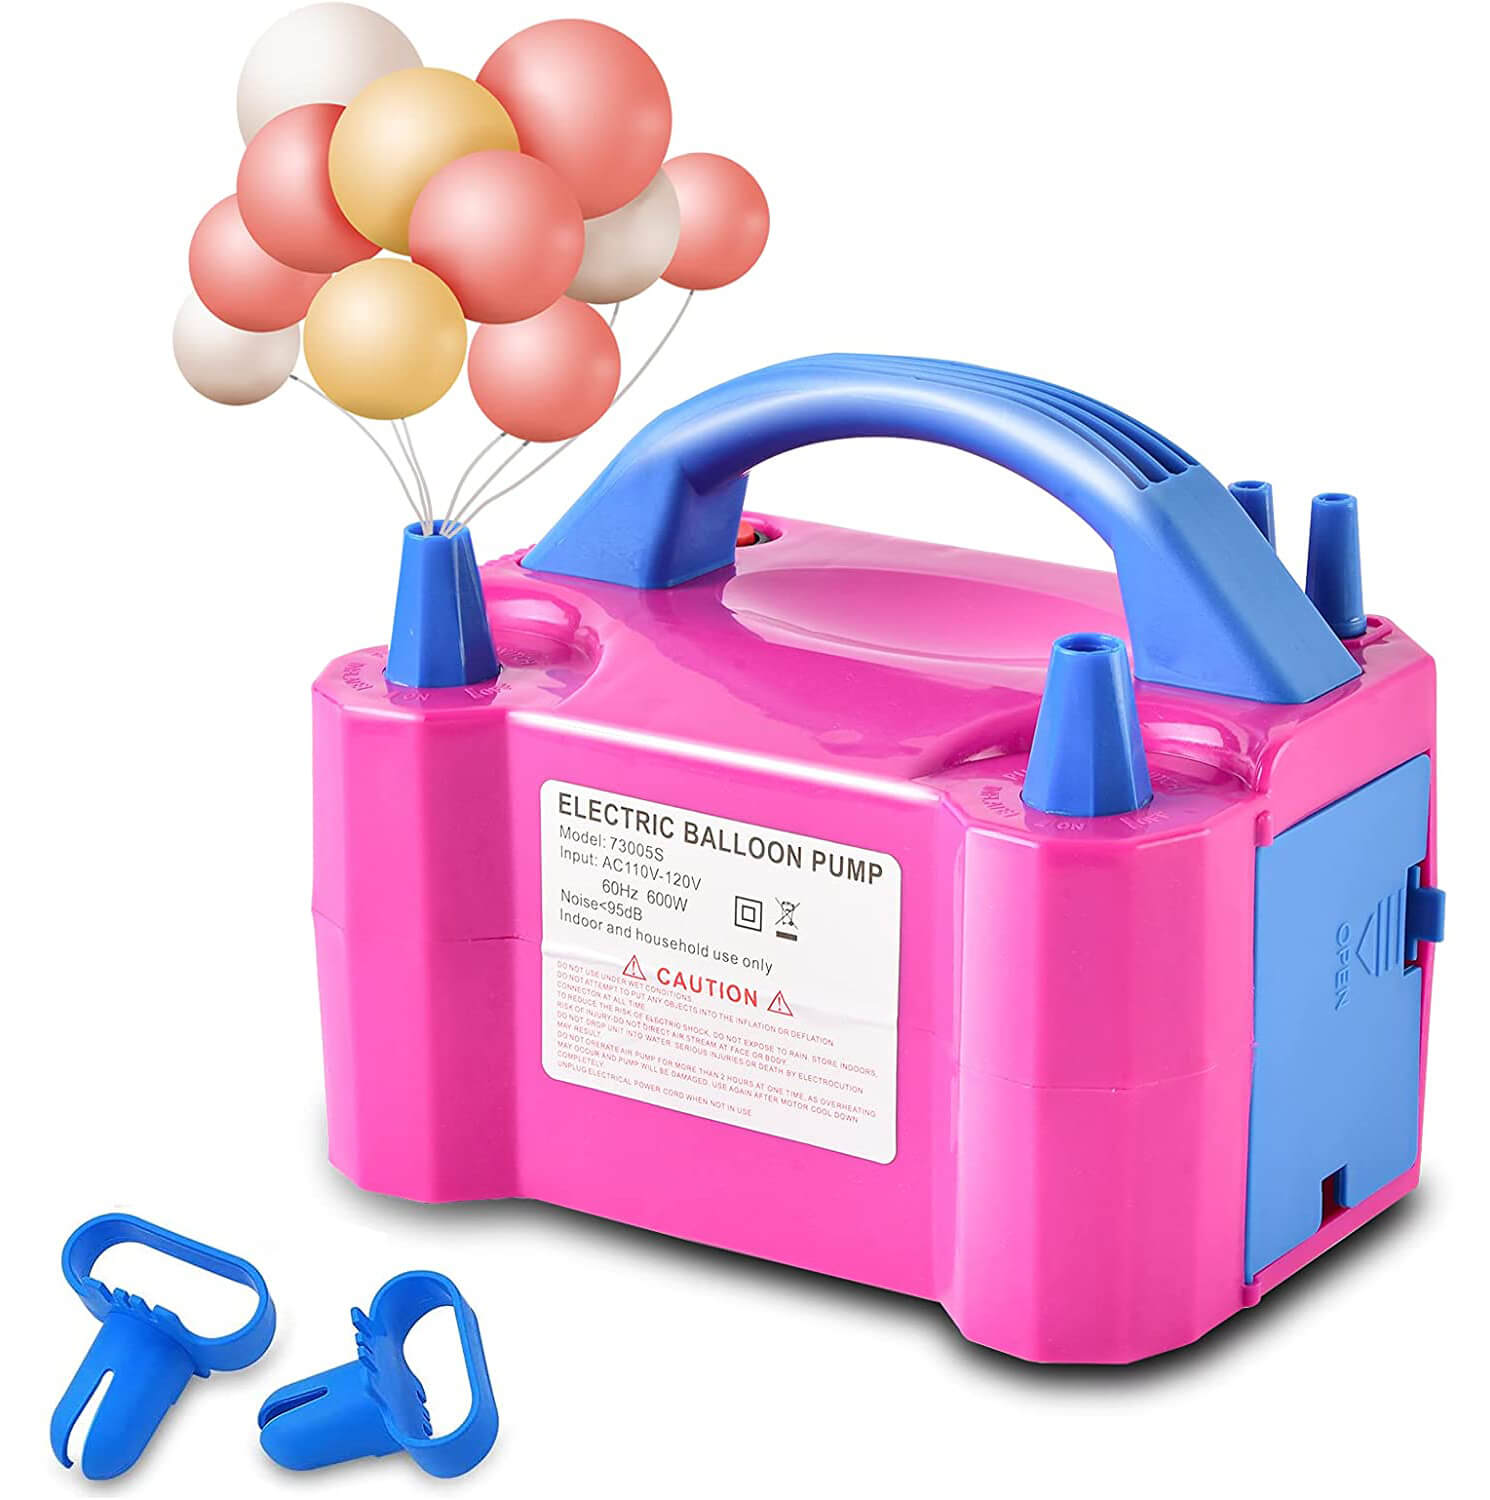 Electric balloon inflator pump